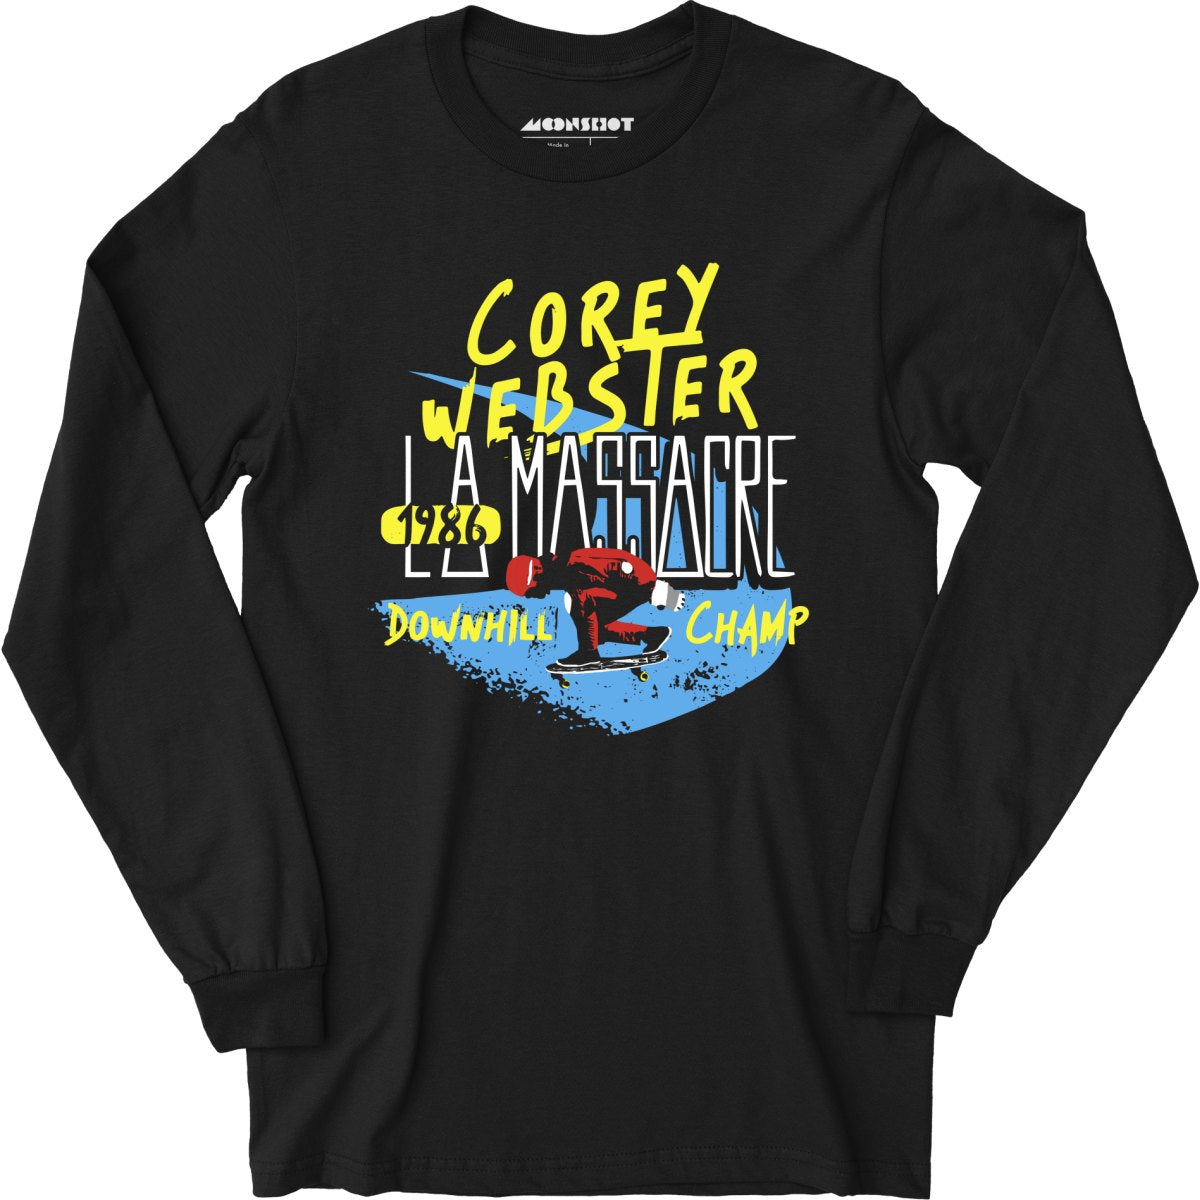 Corey Webster 1986 LA Massacre Downhill Champ - Long Sleeve T-Shirt